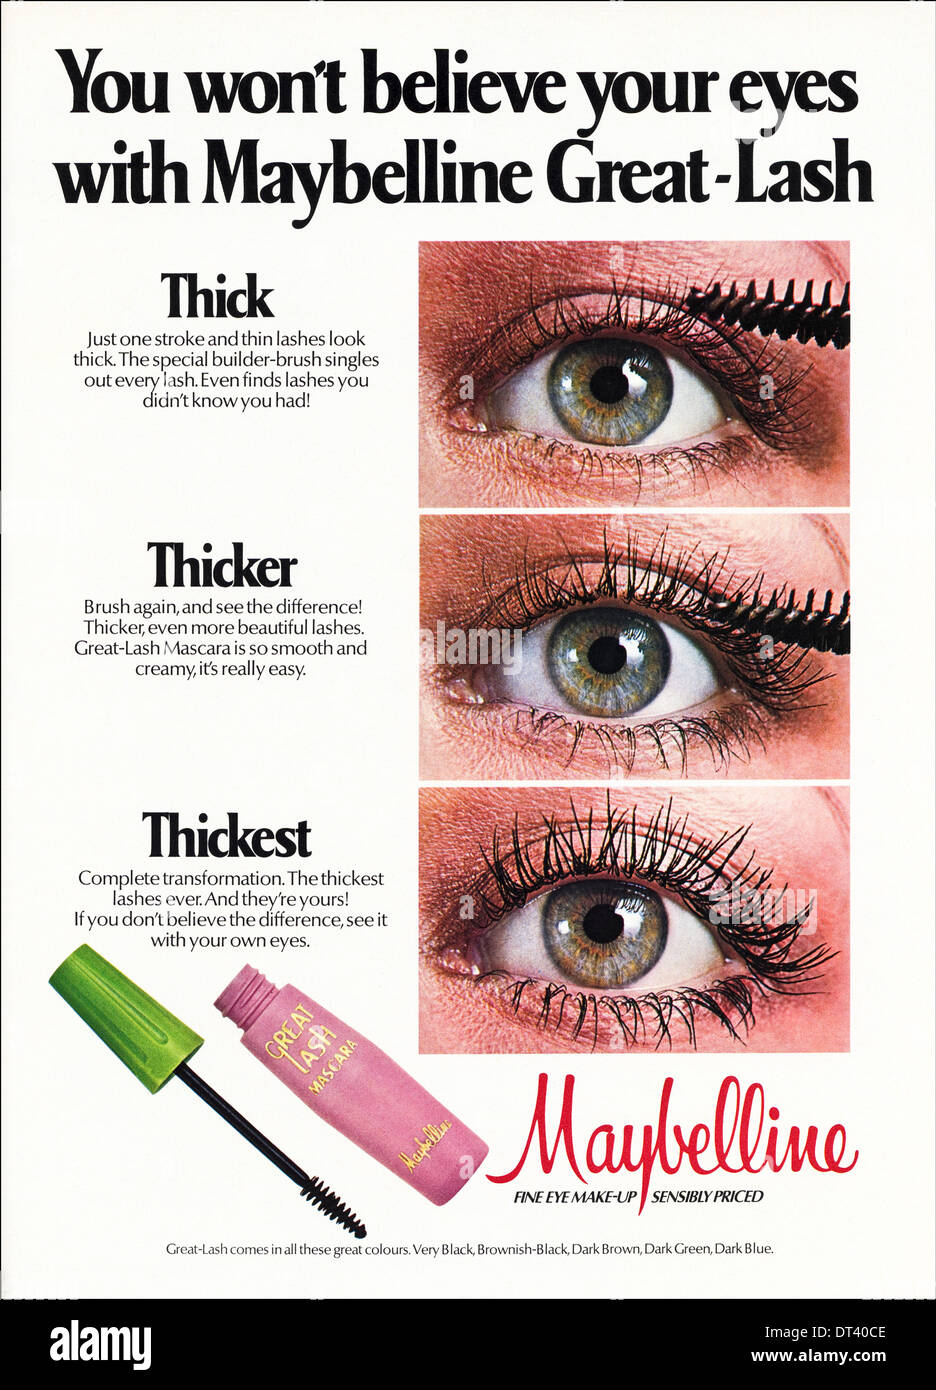 1970s fashion magazine advertisement advertising MAYBELLINE mascara, advert circa 1975 Stock Photo